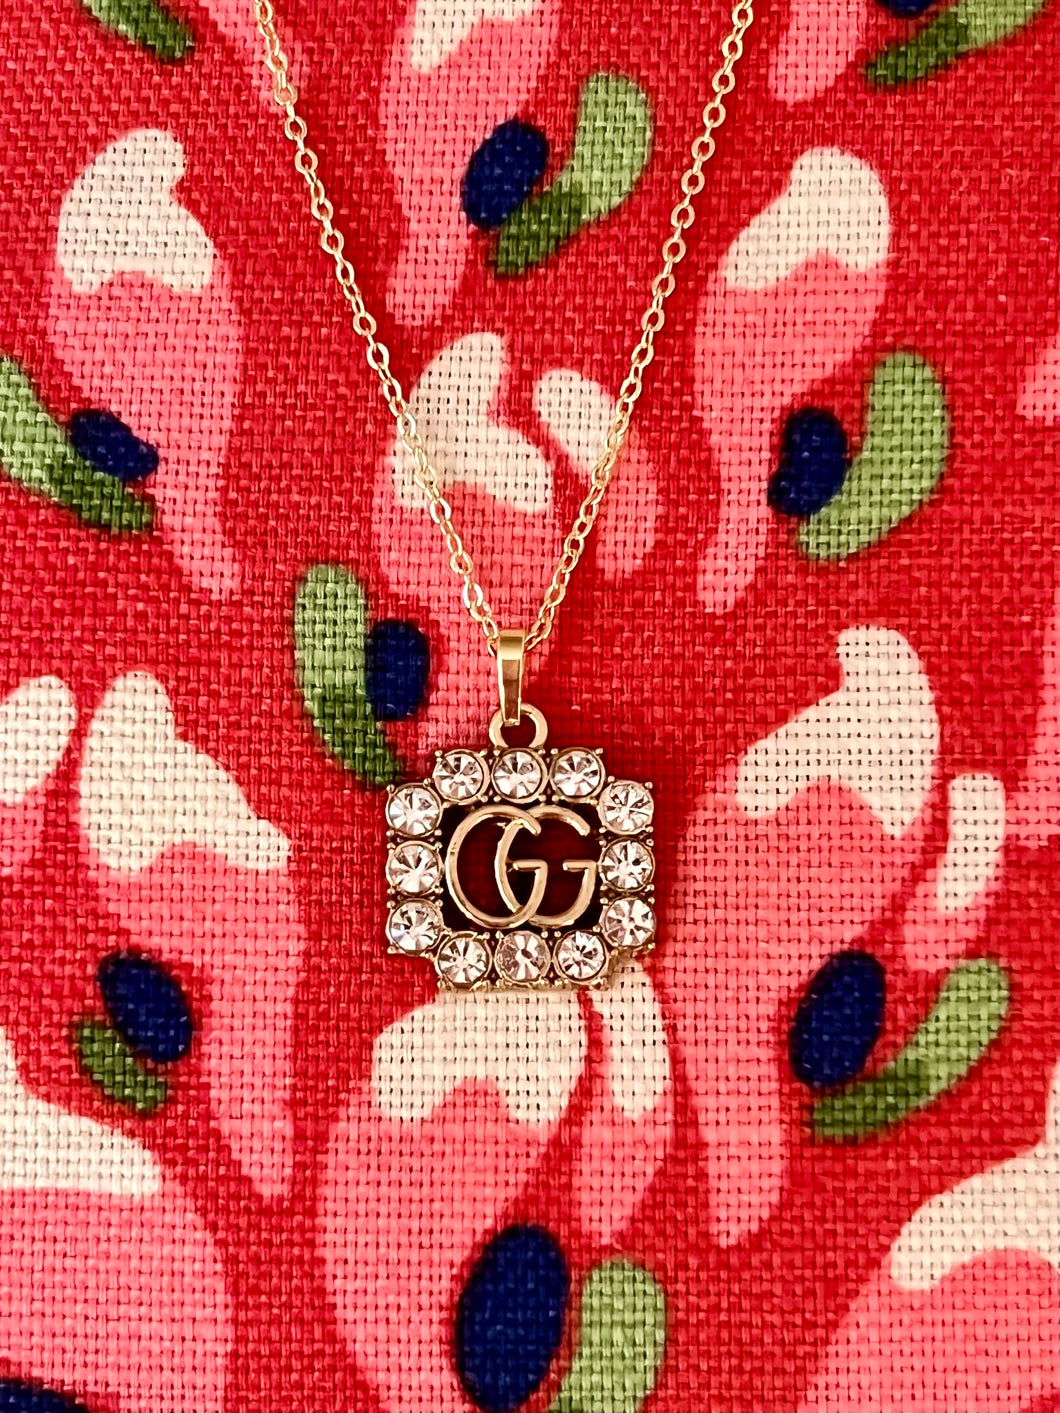 Repurposed GG Stone Necklace